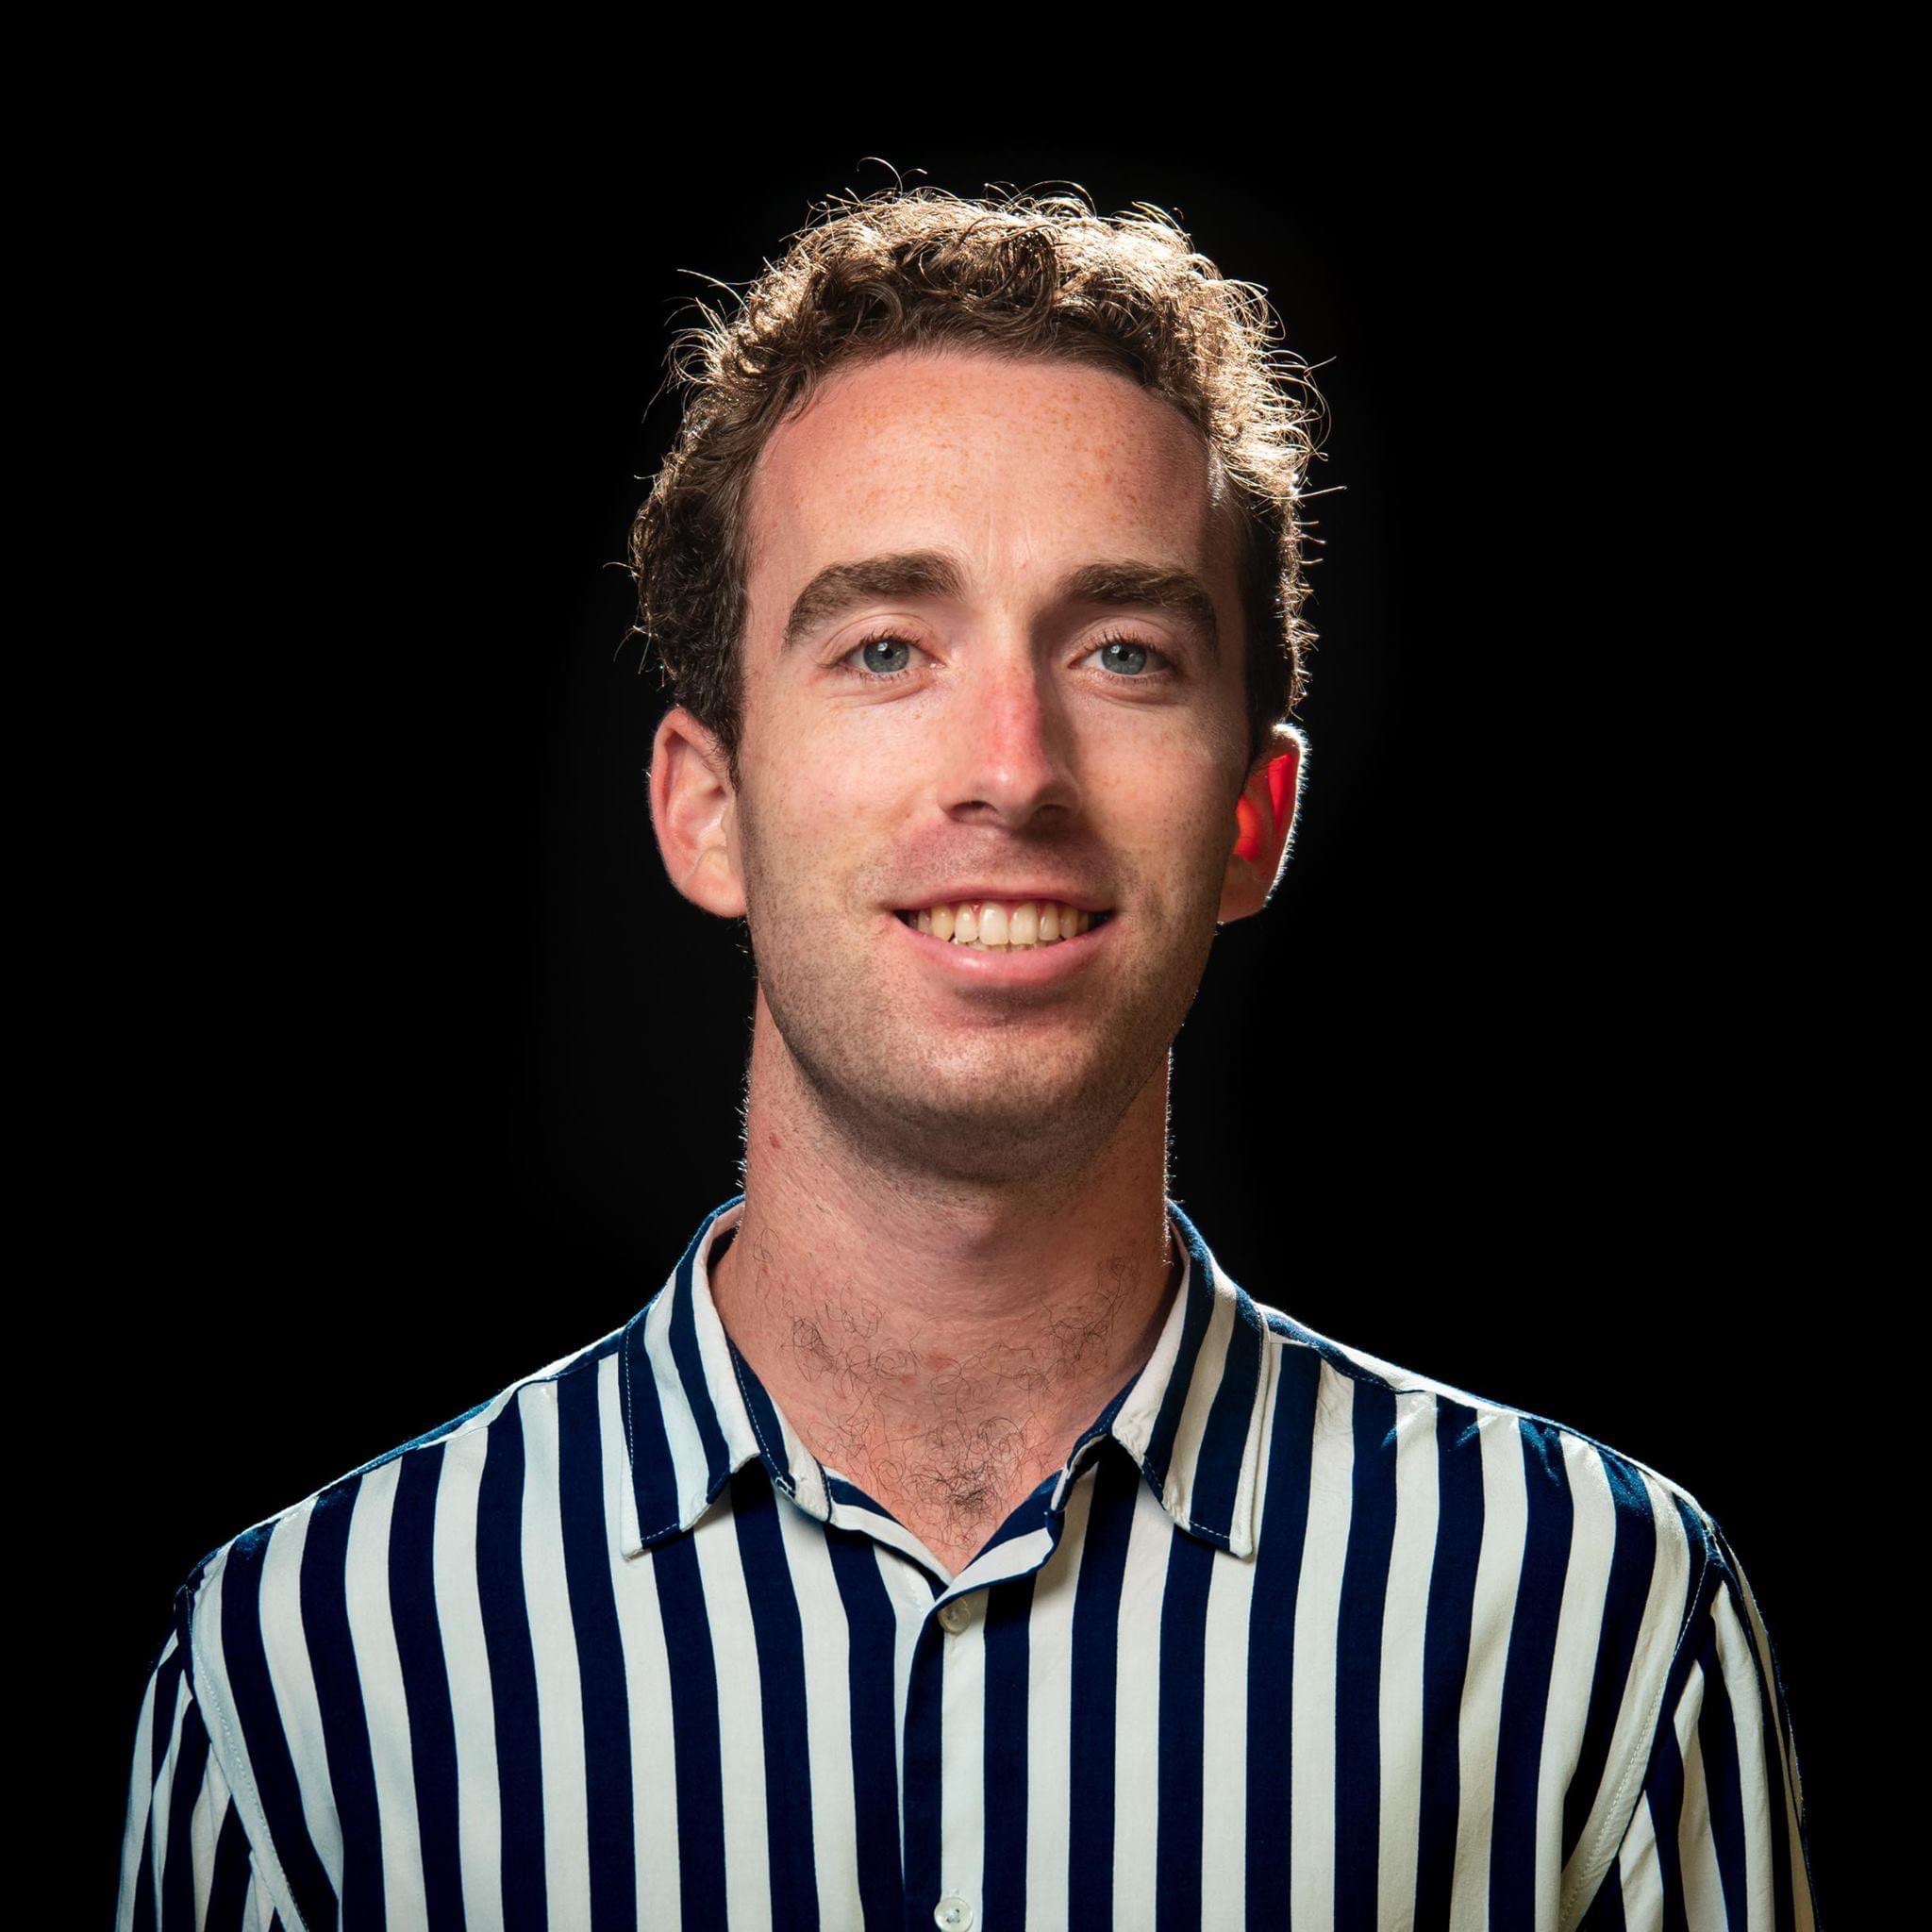 Michael Blackburn in a striped shirt against a black background